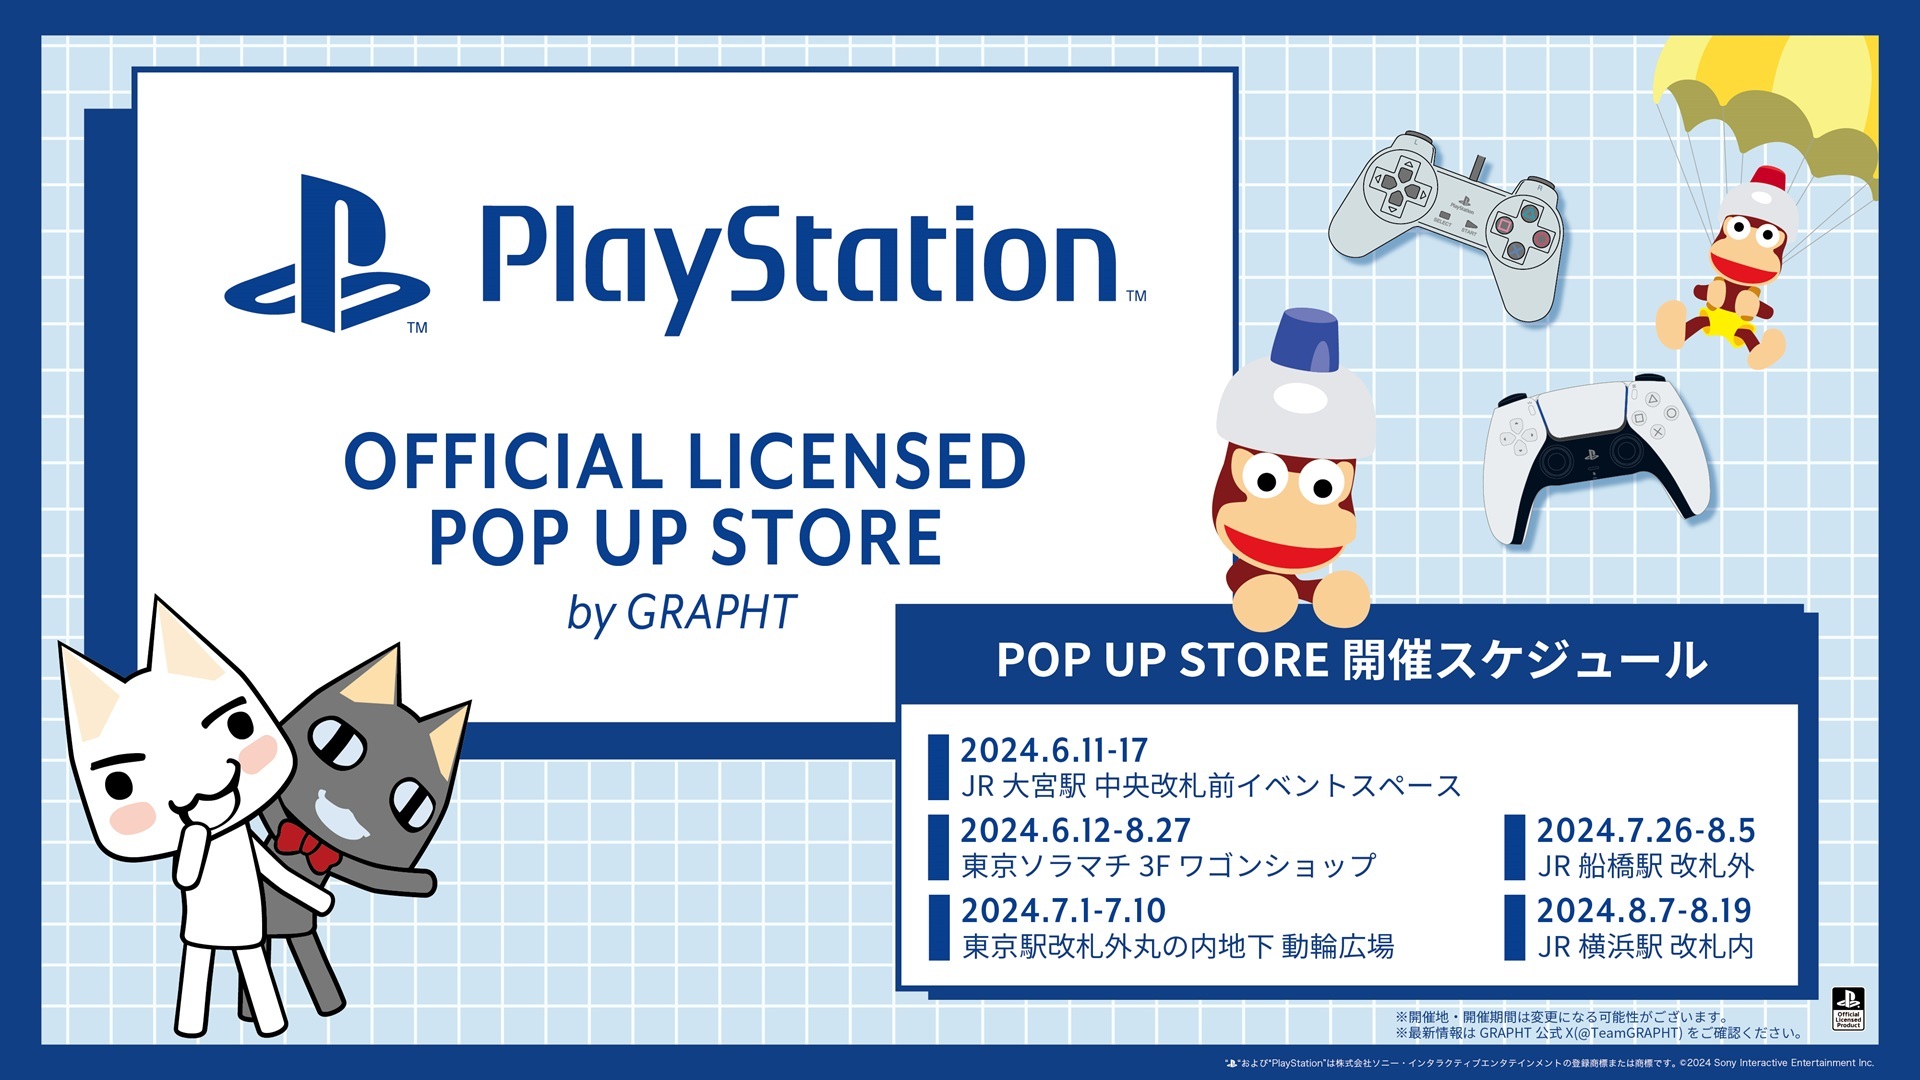 「PlayStation(TM) POP UP STORE」を6月12日(水)より
東京ソラマチ(R)にて開催　そのほか全国6箇所で巡回開催決定